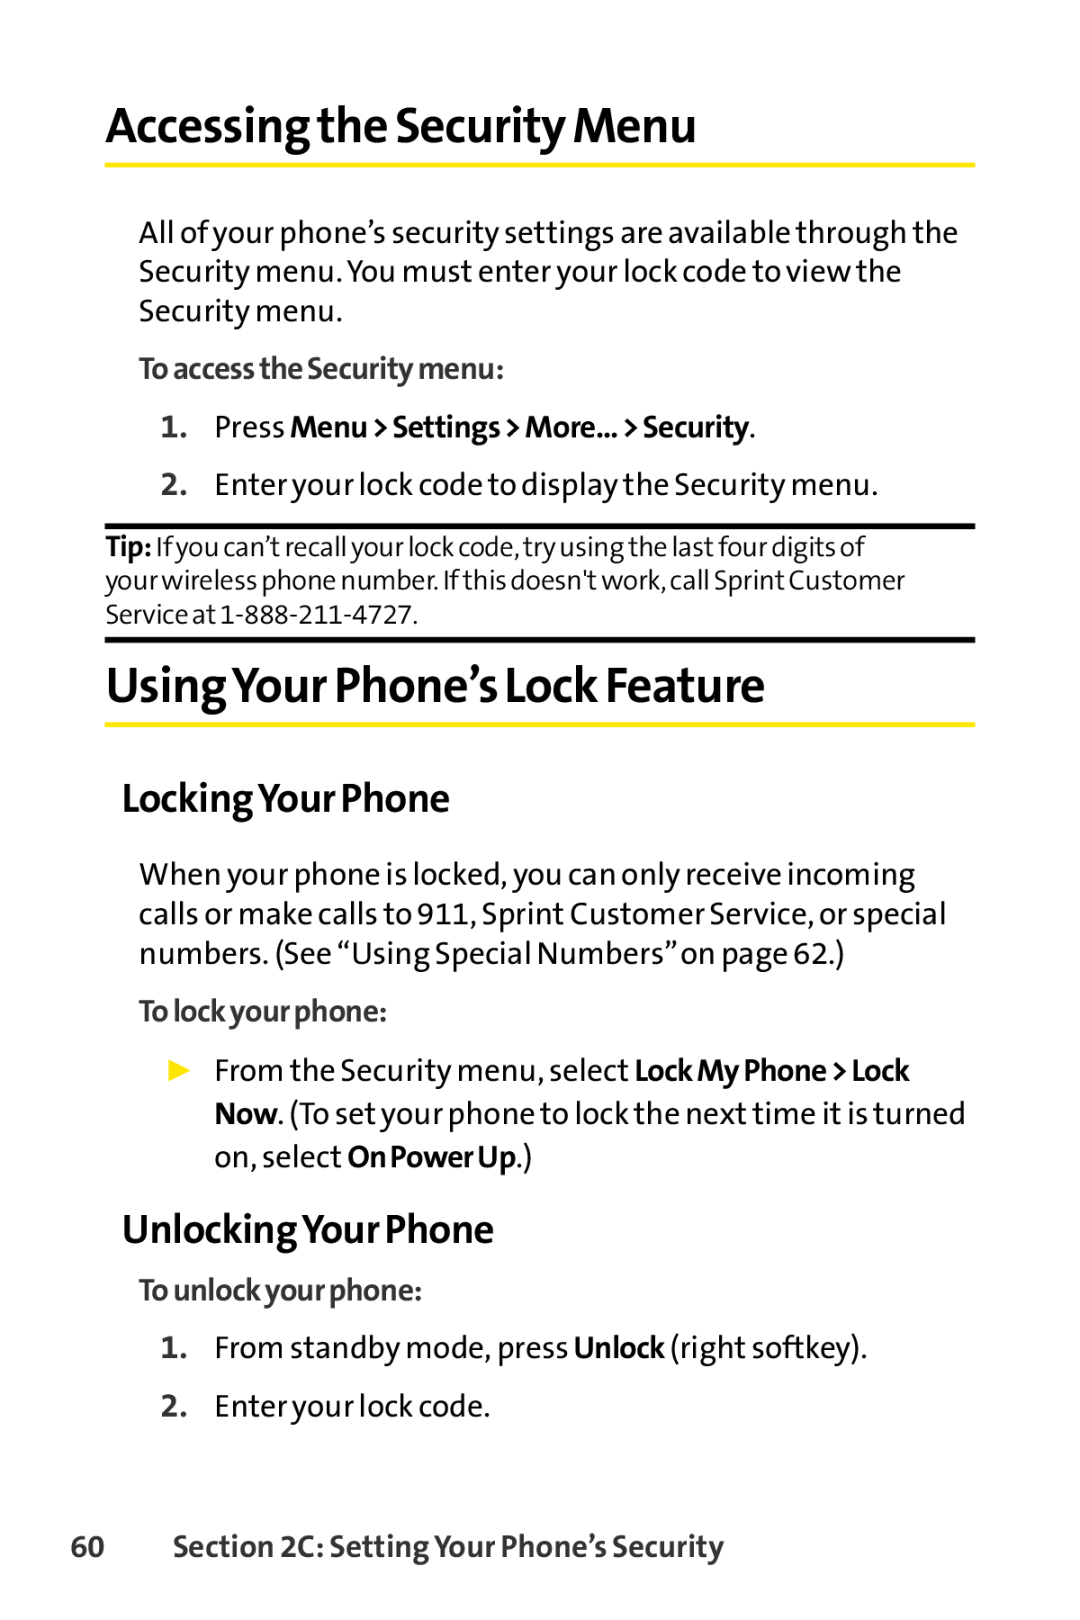 Sprint Nextel LX160 Accessing the Security Menu, UsingYour Phone’s Lock Feature, LockingYour Phone, UnlockingYour Phone 